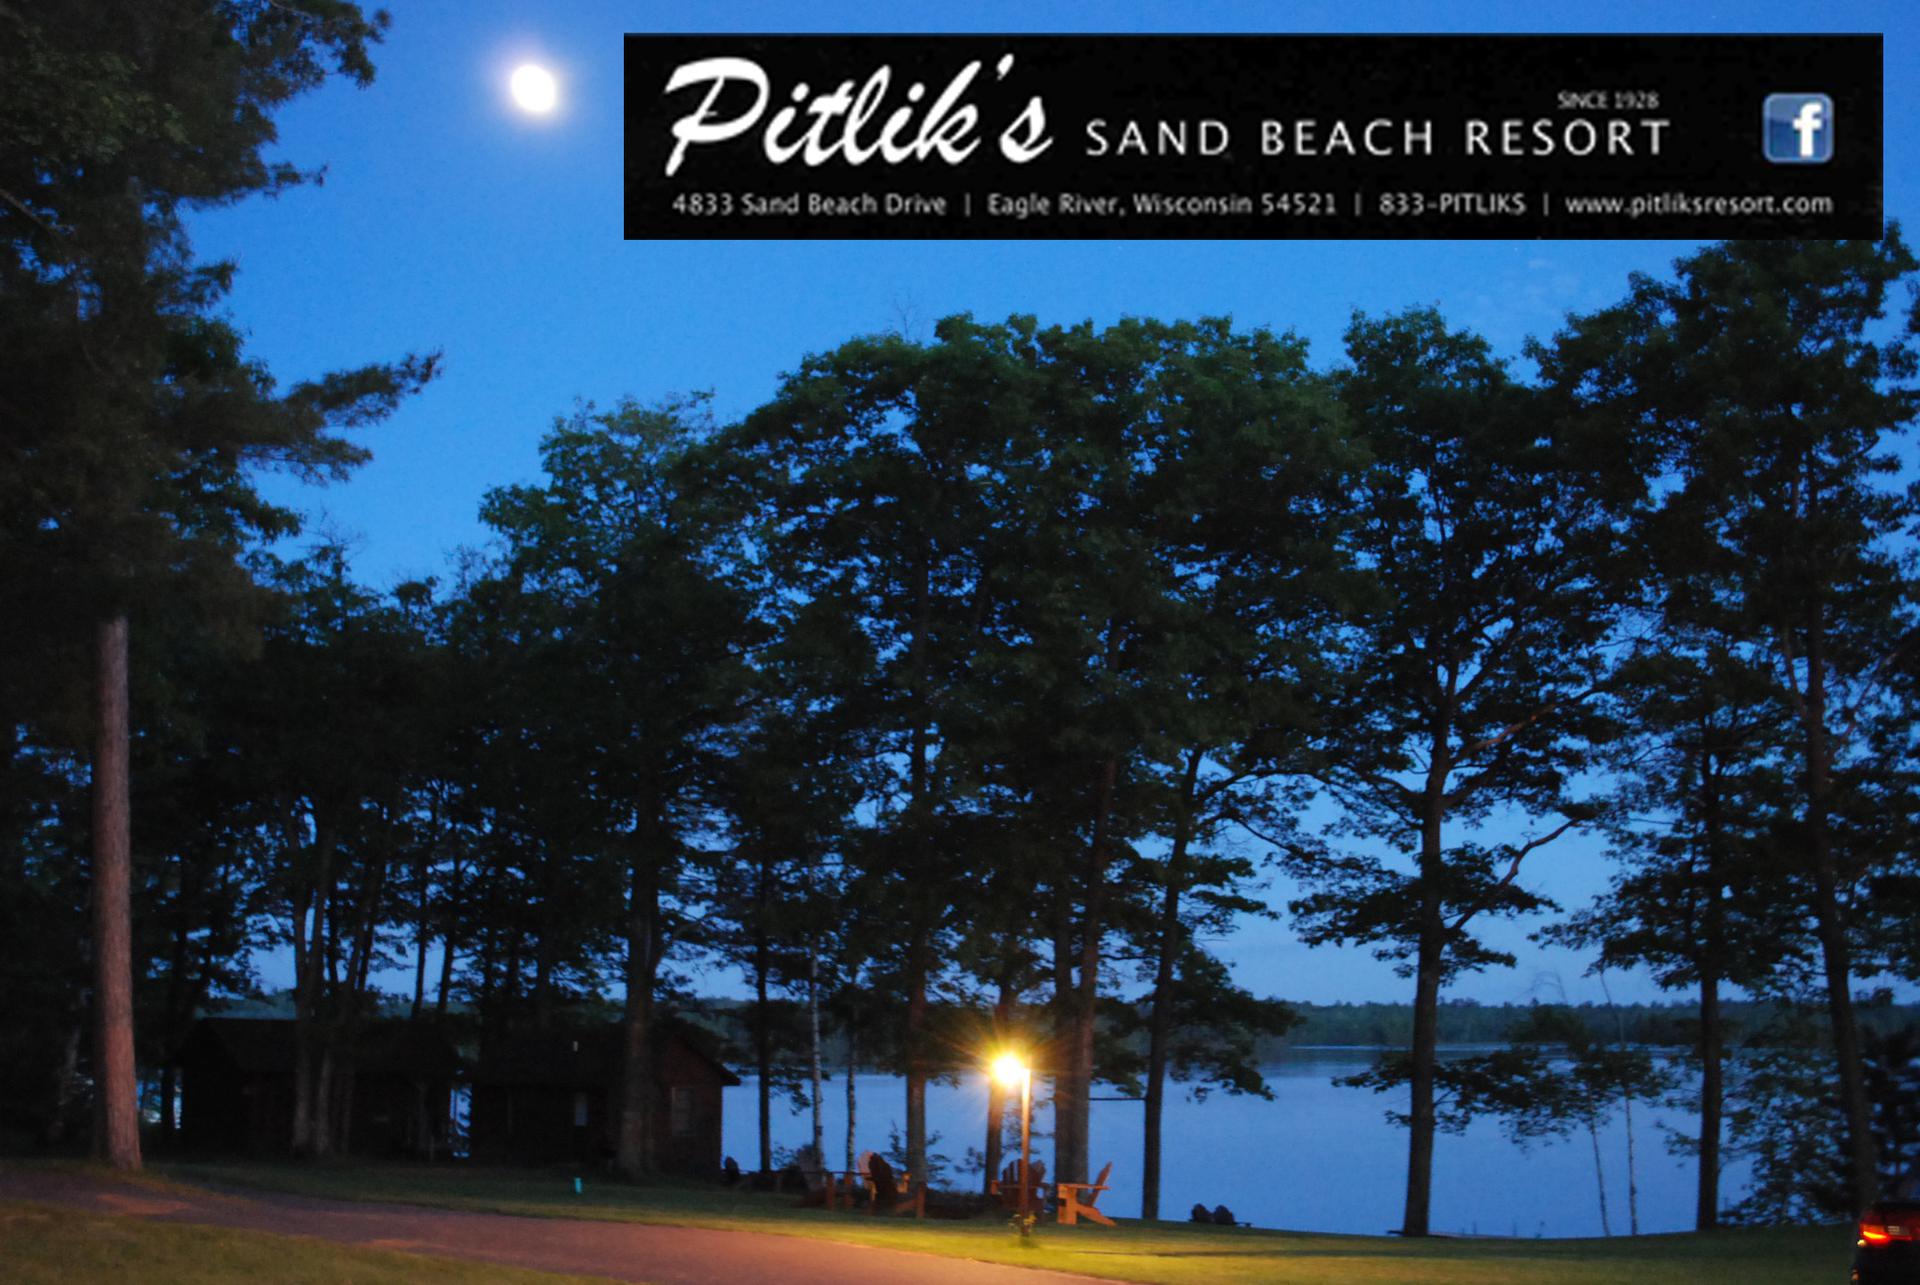 Piltliks Sand Beach Resort